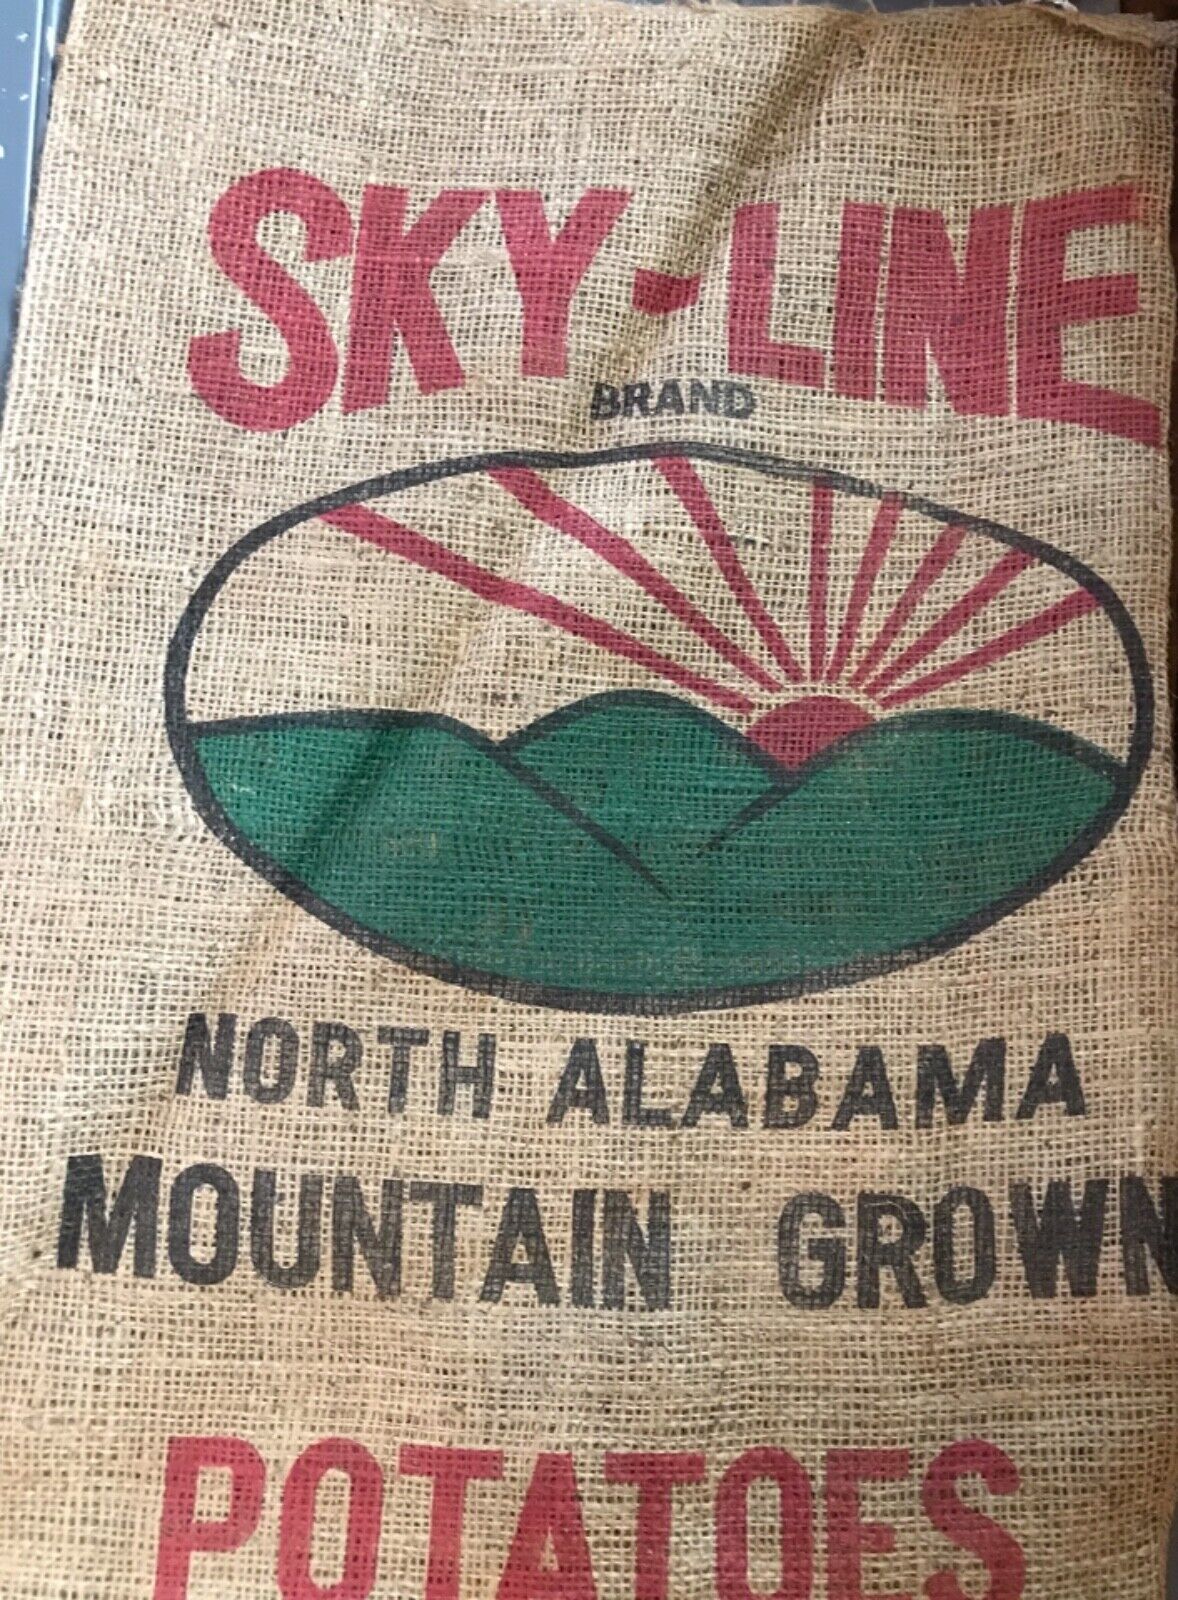 Vintage Burlap Bag Potatoe Sack, NOS 50 lb Graphic, Skyline Alabama Mountain